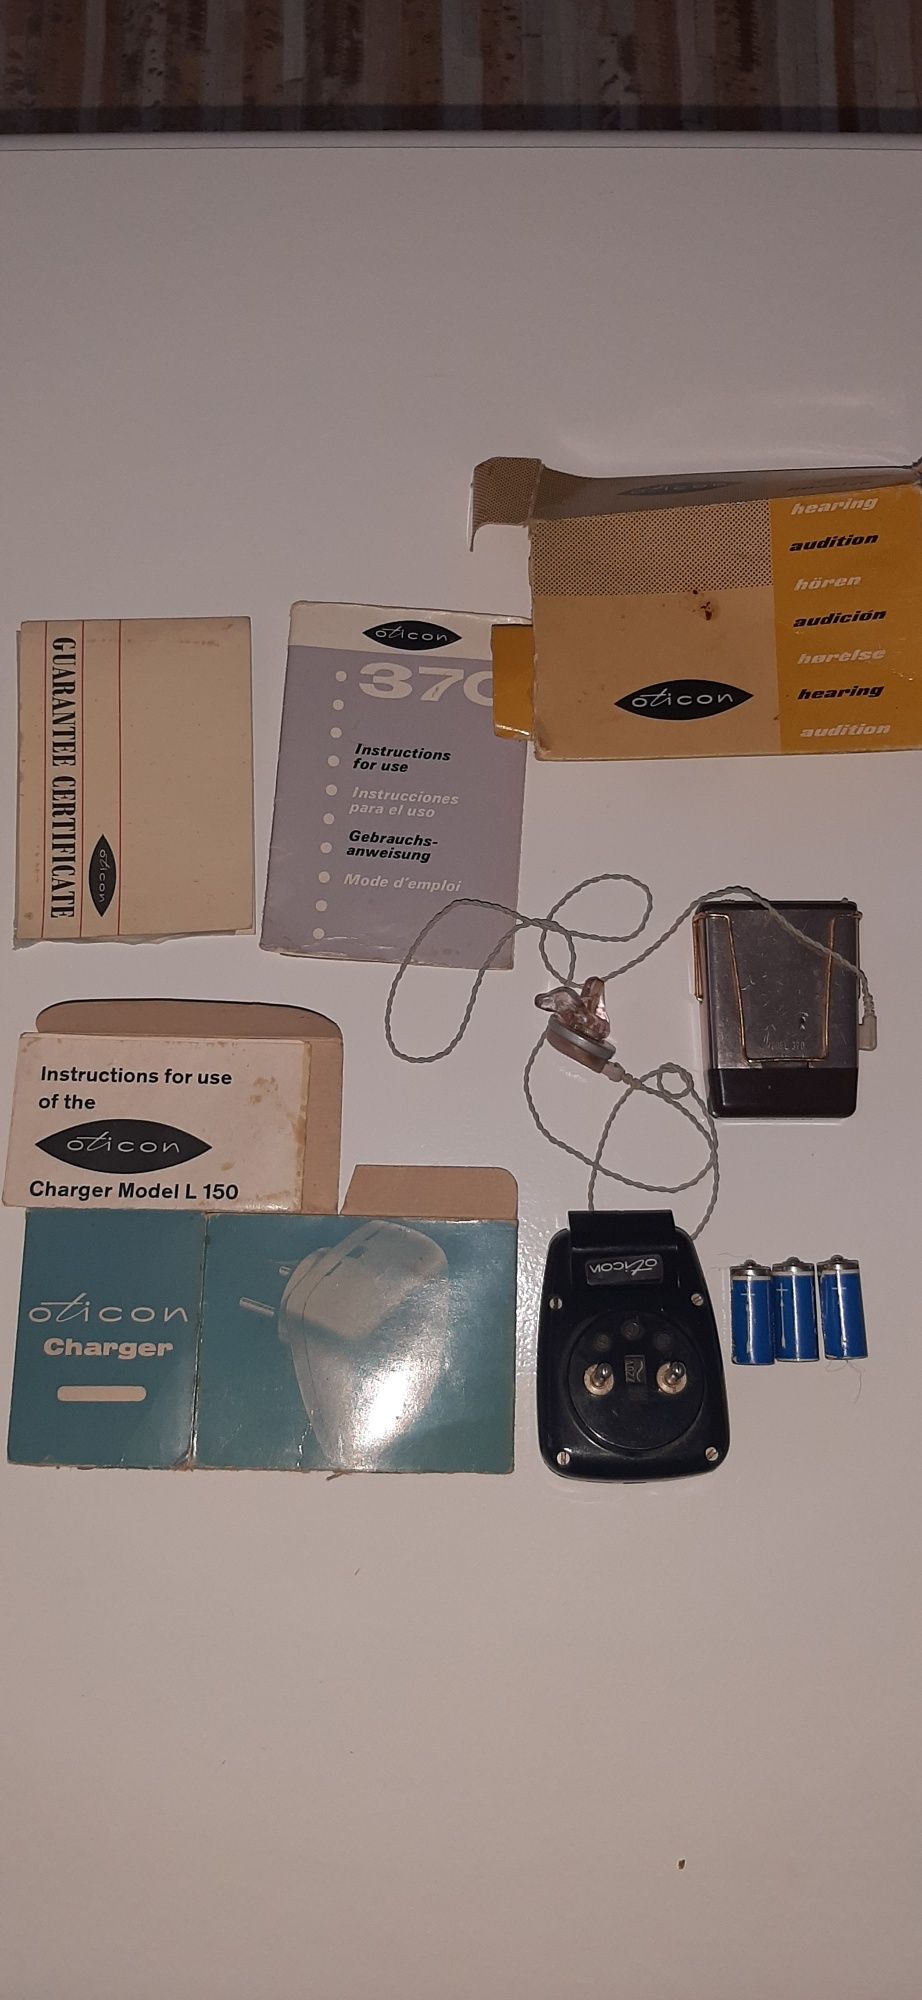 Aparat auditiv vintage Oticon 370 anii 70 aparat igienizare